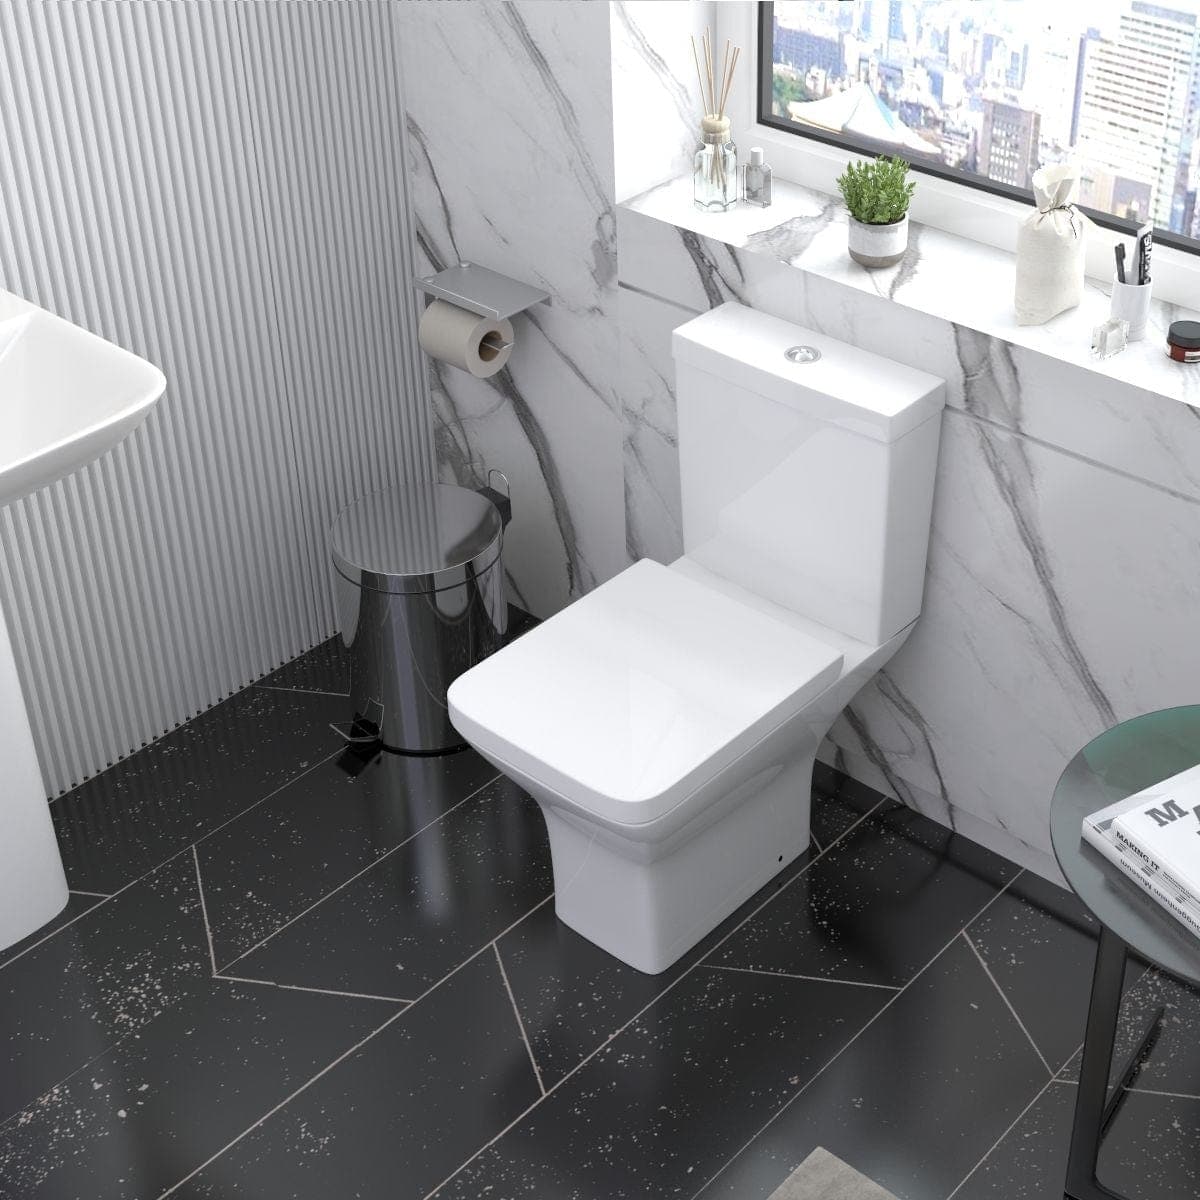 iBathUK Toilets > Close Coupled Toilets Venice Ceramic Close Coupled Toilet - White